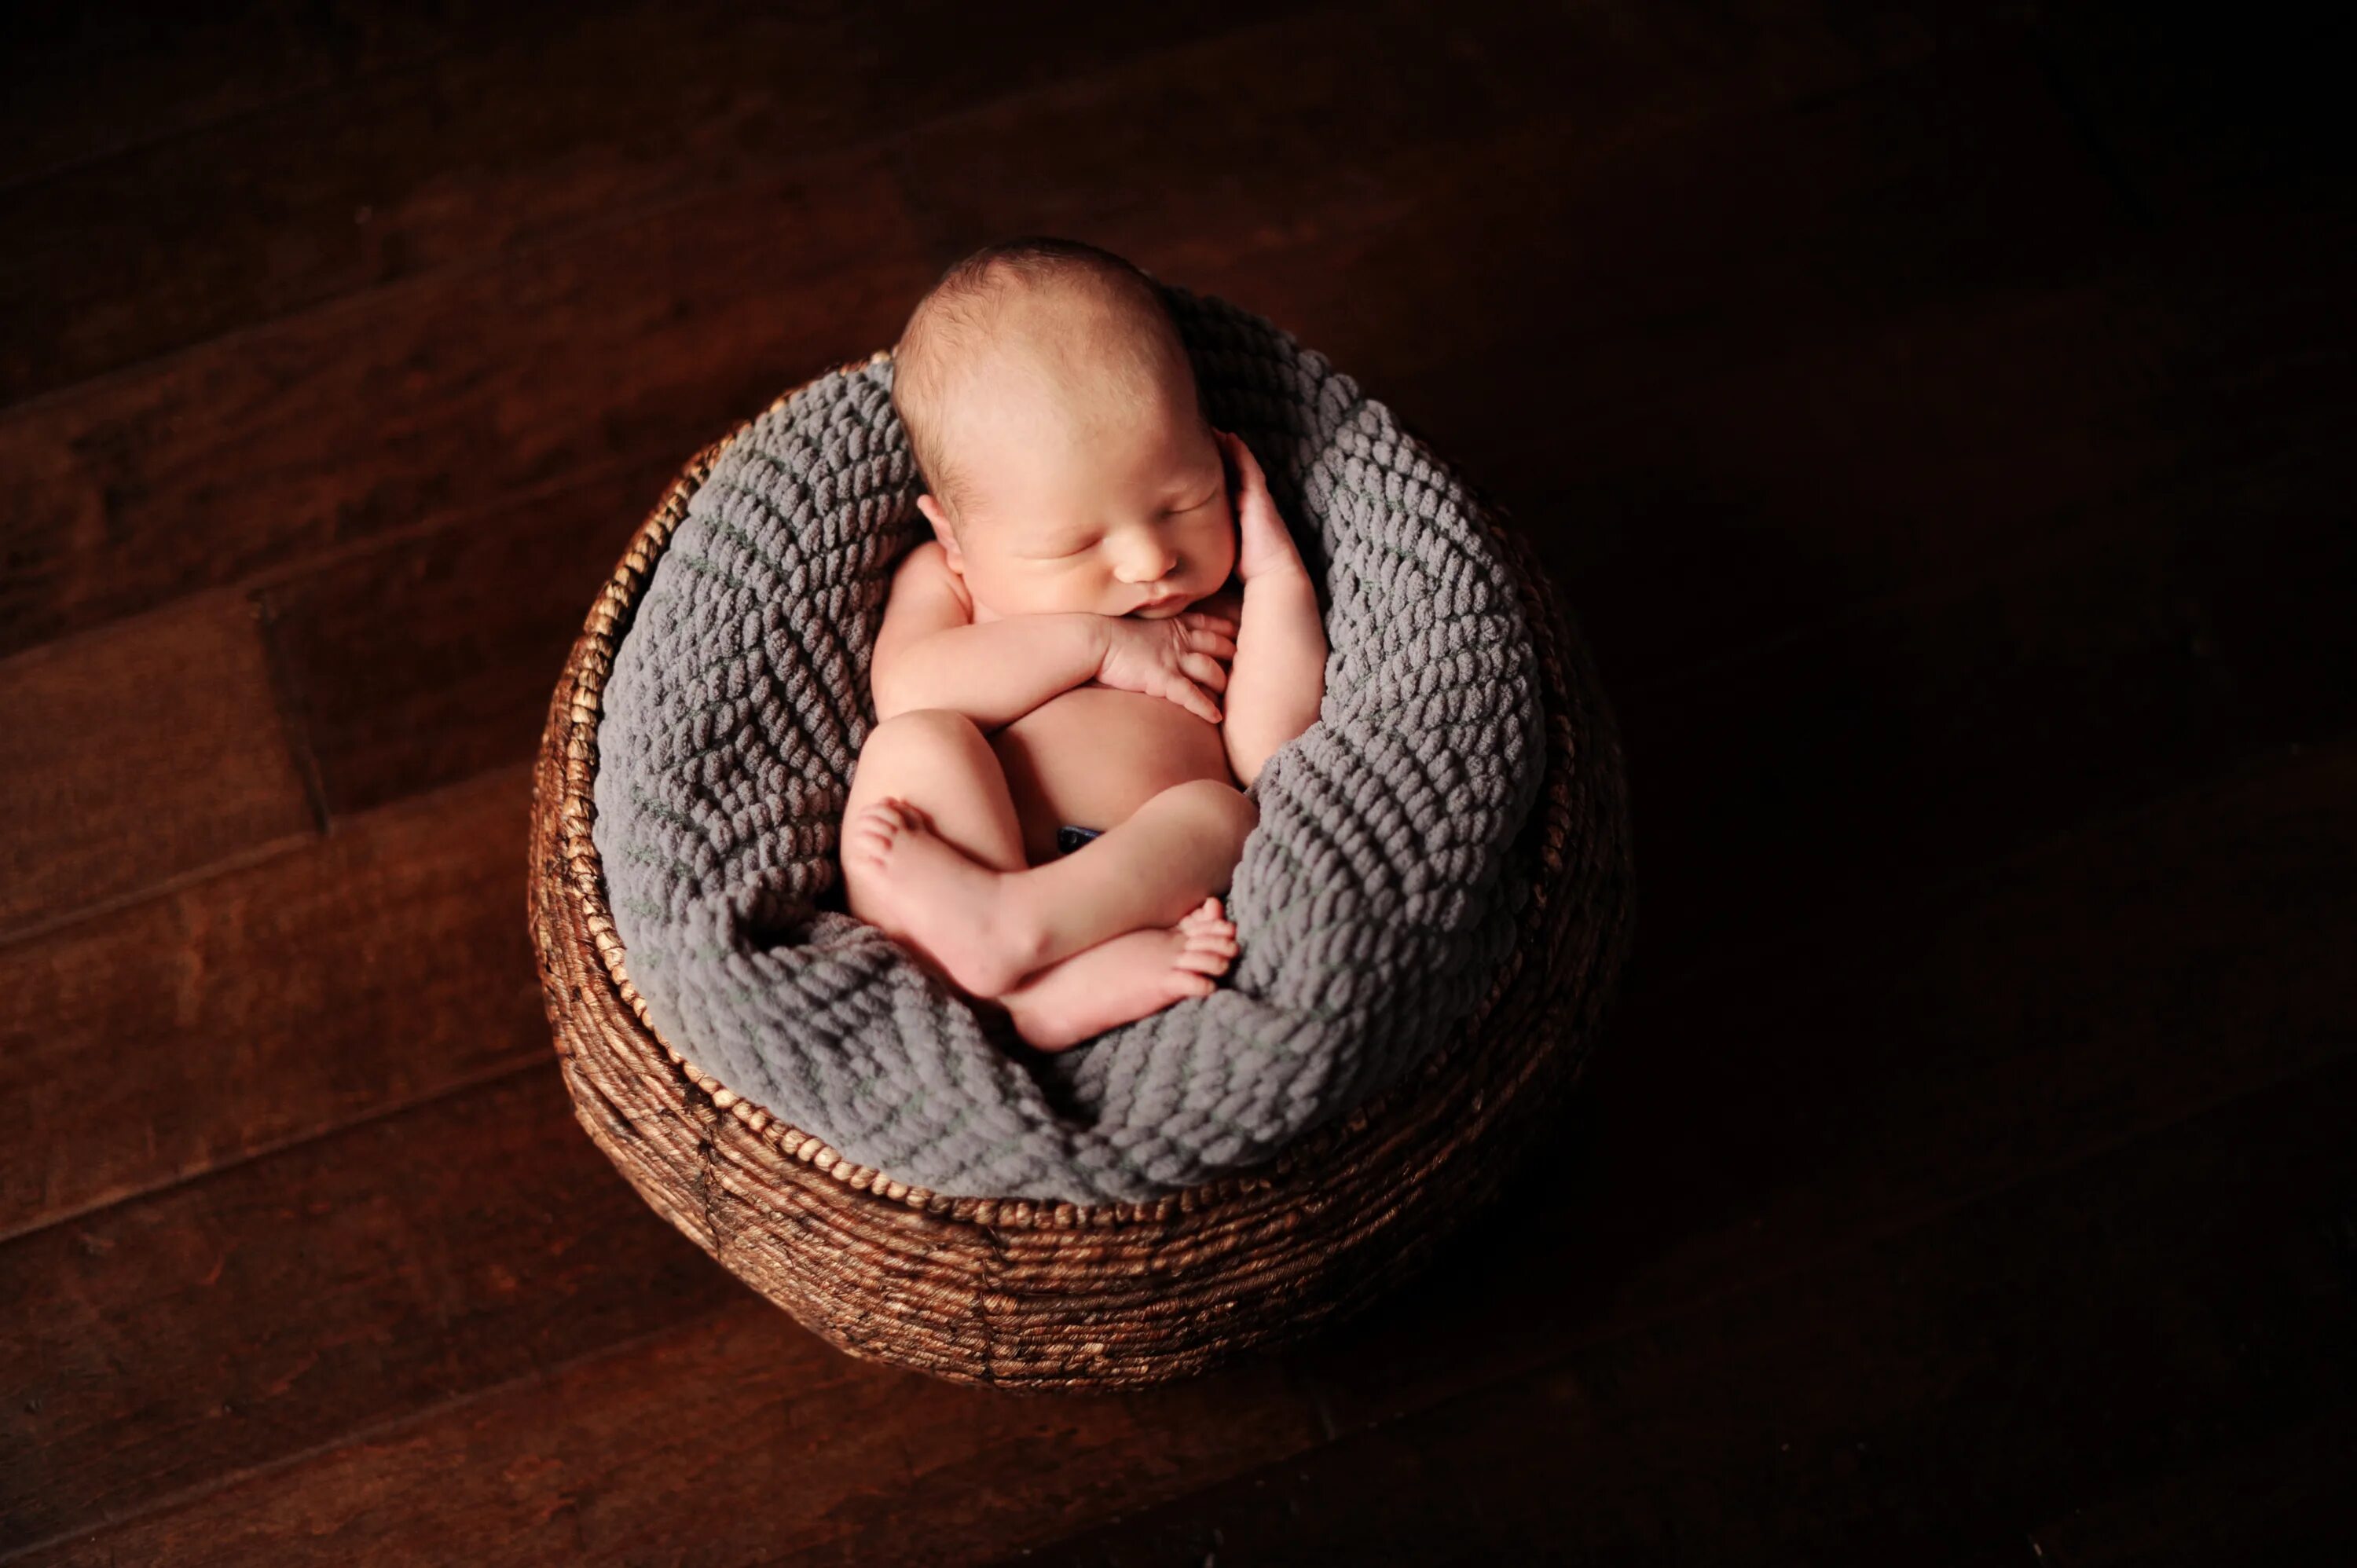 New born 2. Бэби Ньюборн. Младенец в корзинке. Фотосессия младенцев. Фотосессия новорожденного в корзине.